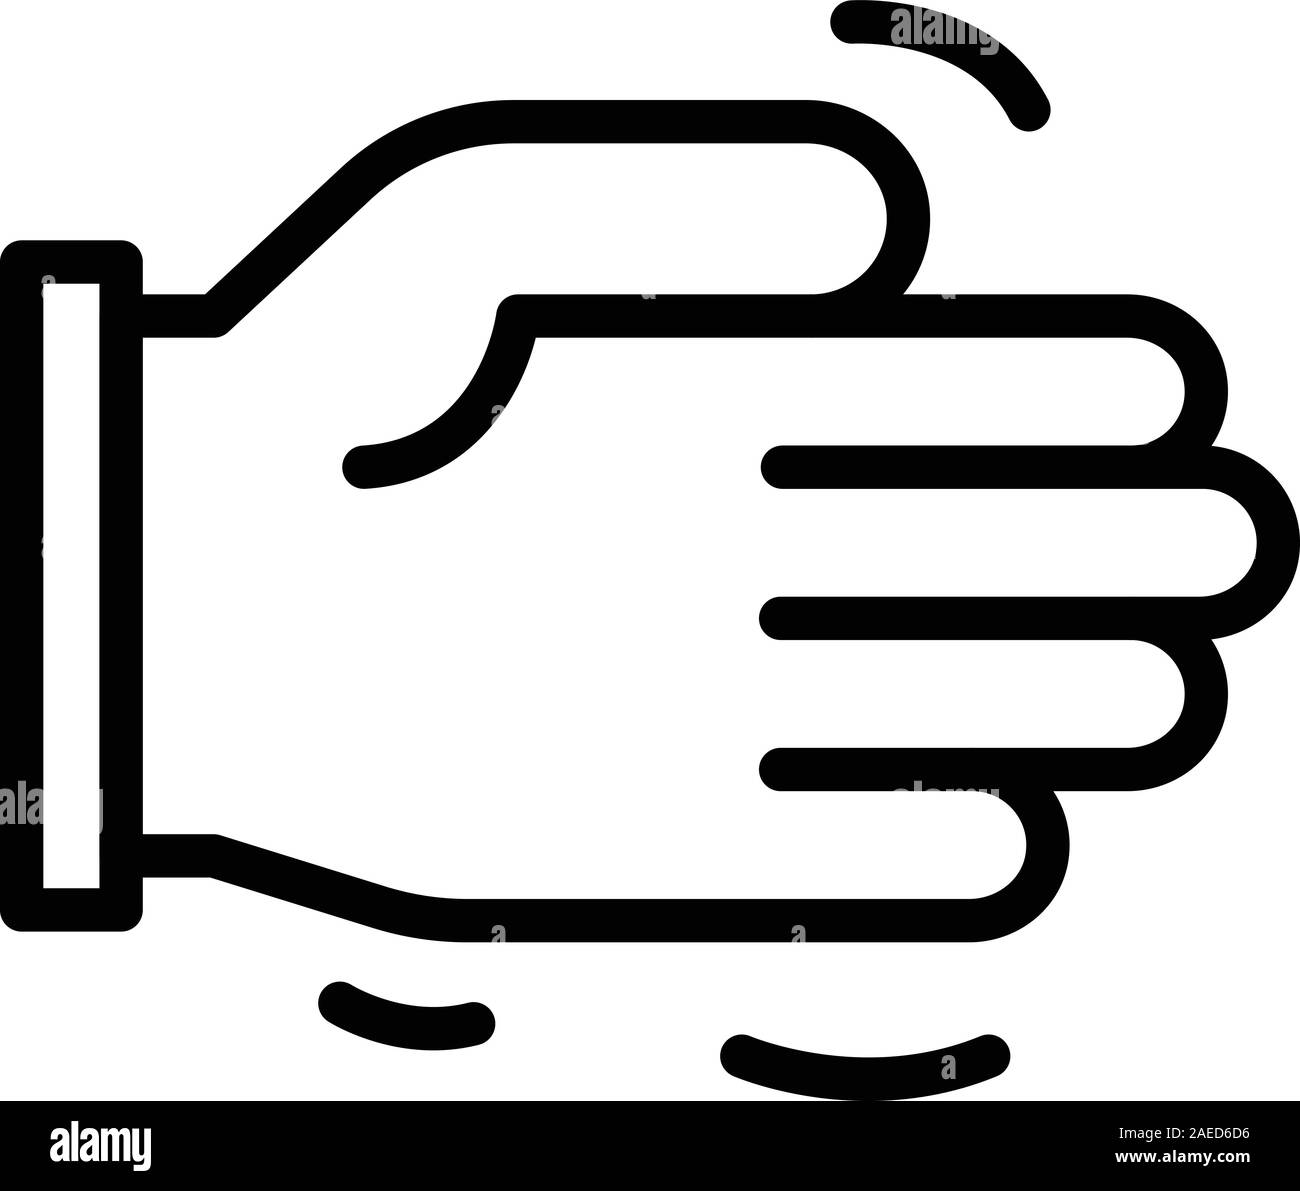 Freund Hilfe Symbol Hand Outline Style Stock Vektorgrafik Alamy